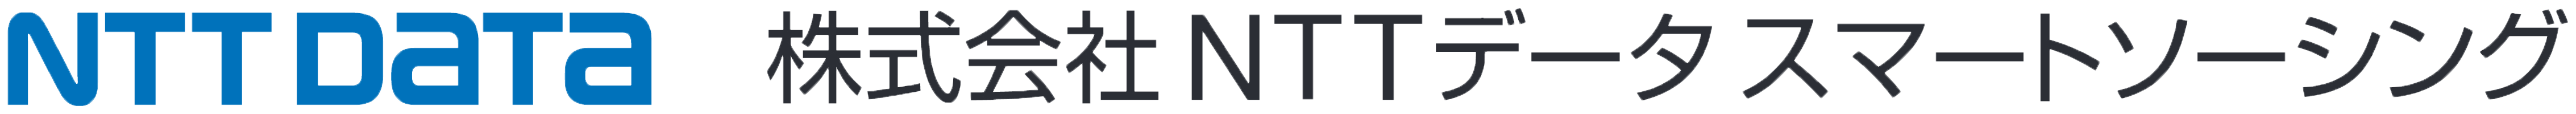 NTTDATA 株式会社 NTTデータ スマートソーシング